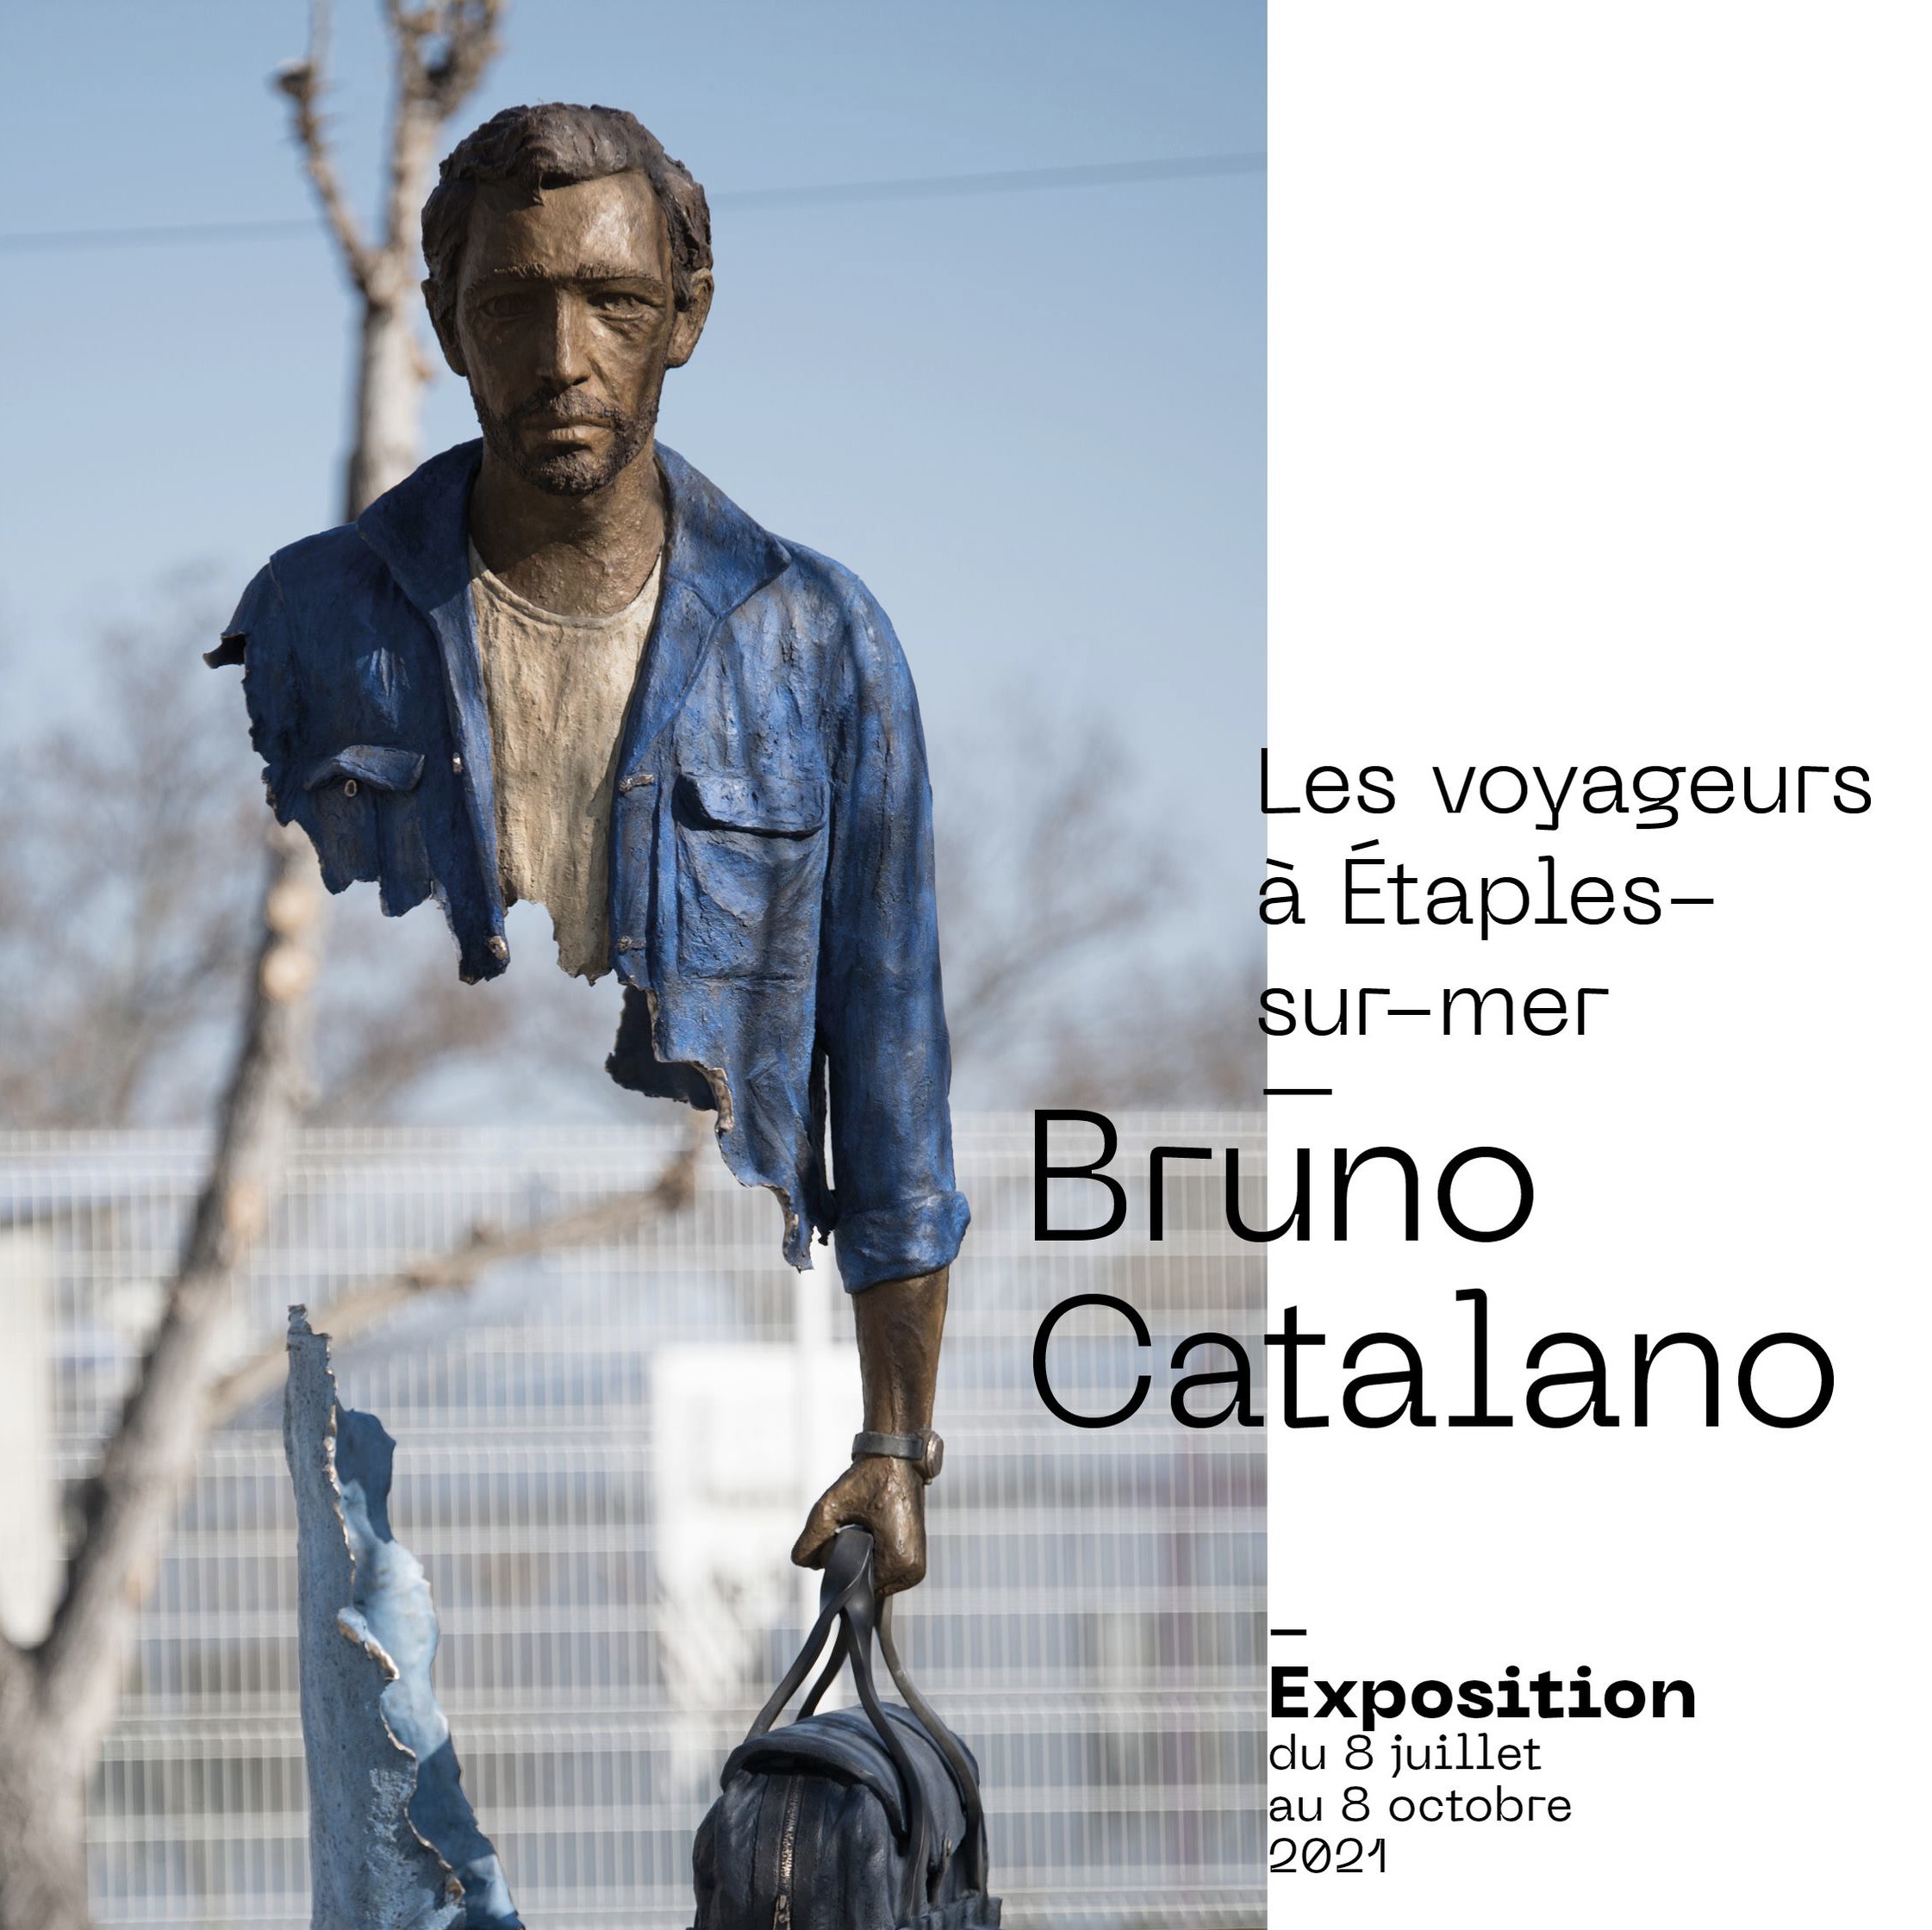 The artist whose work travels around the World: Bruno Catalano